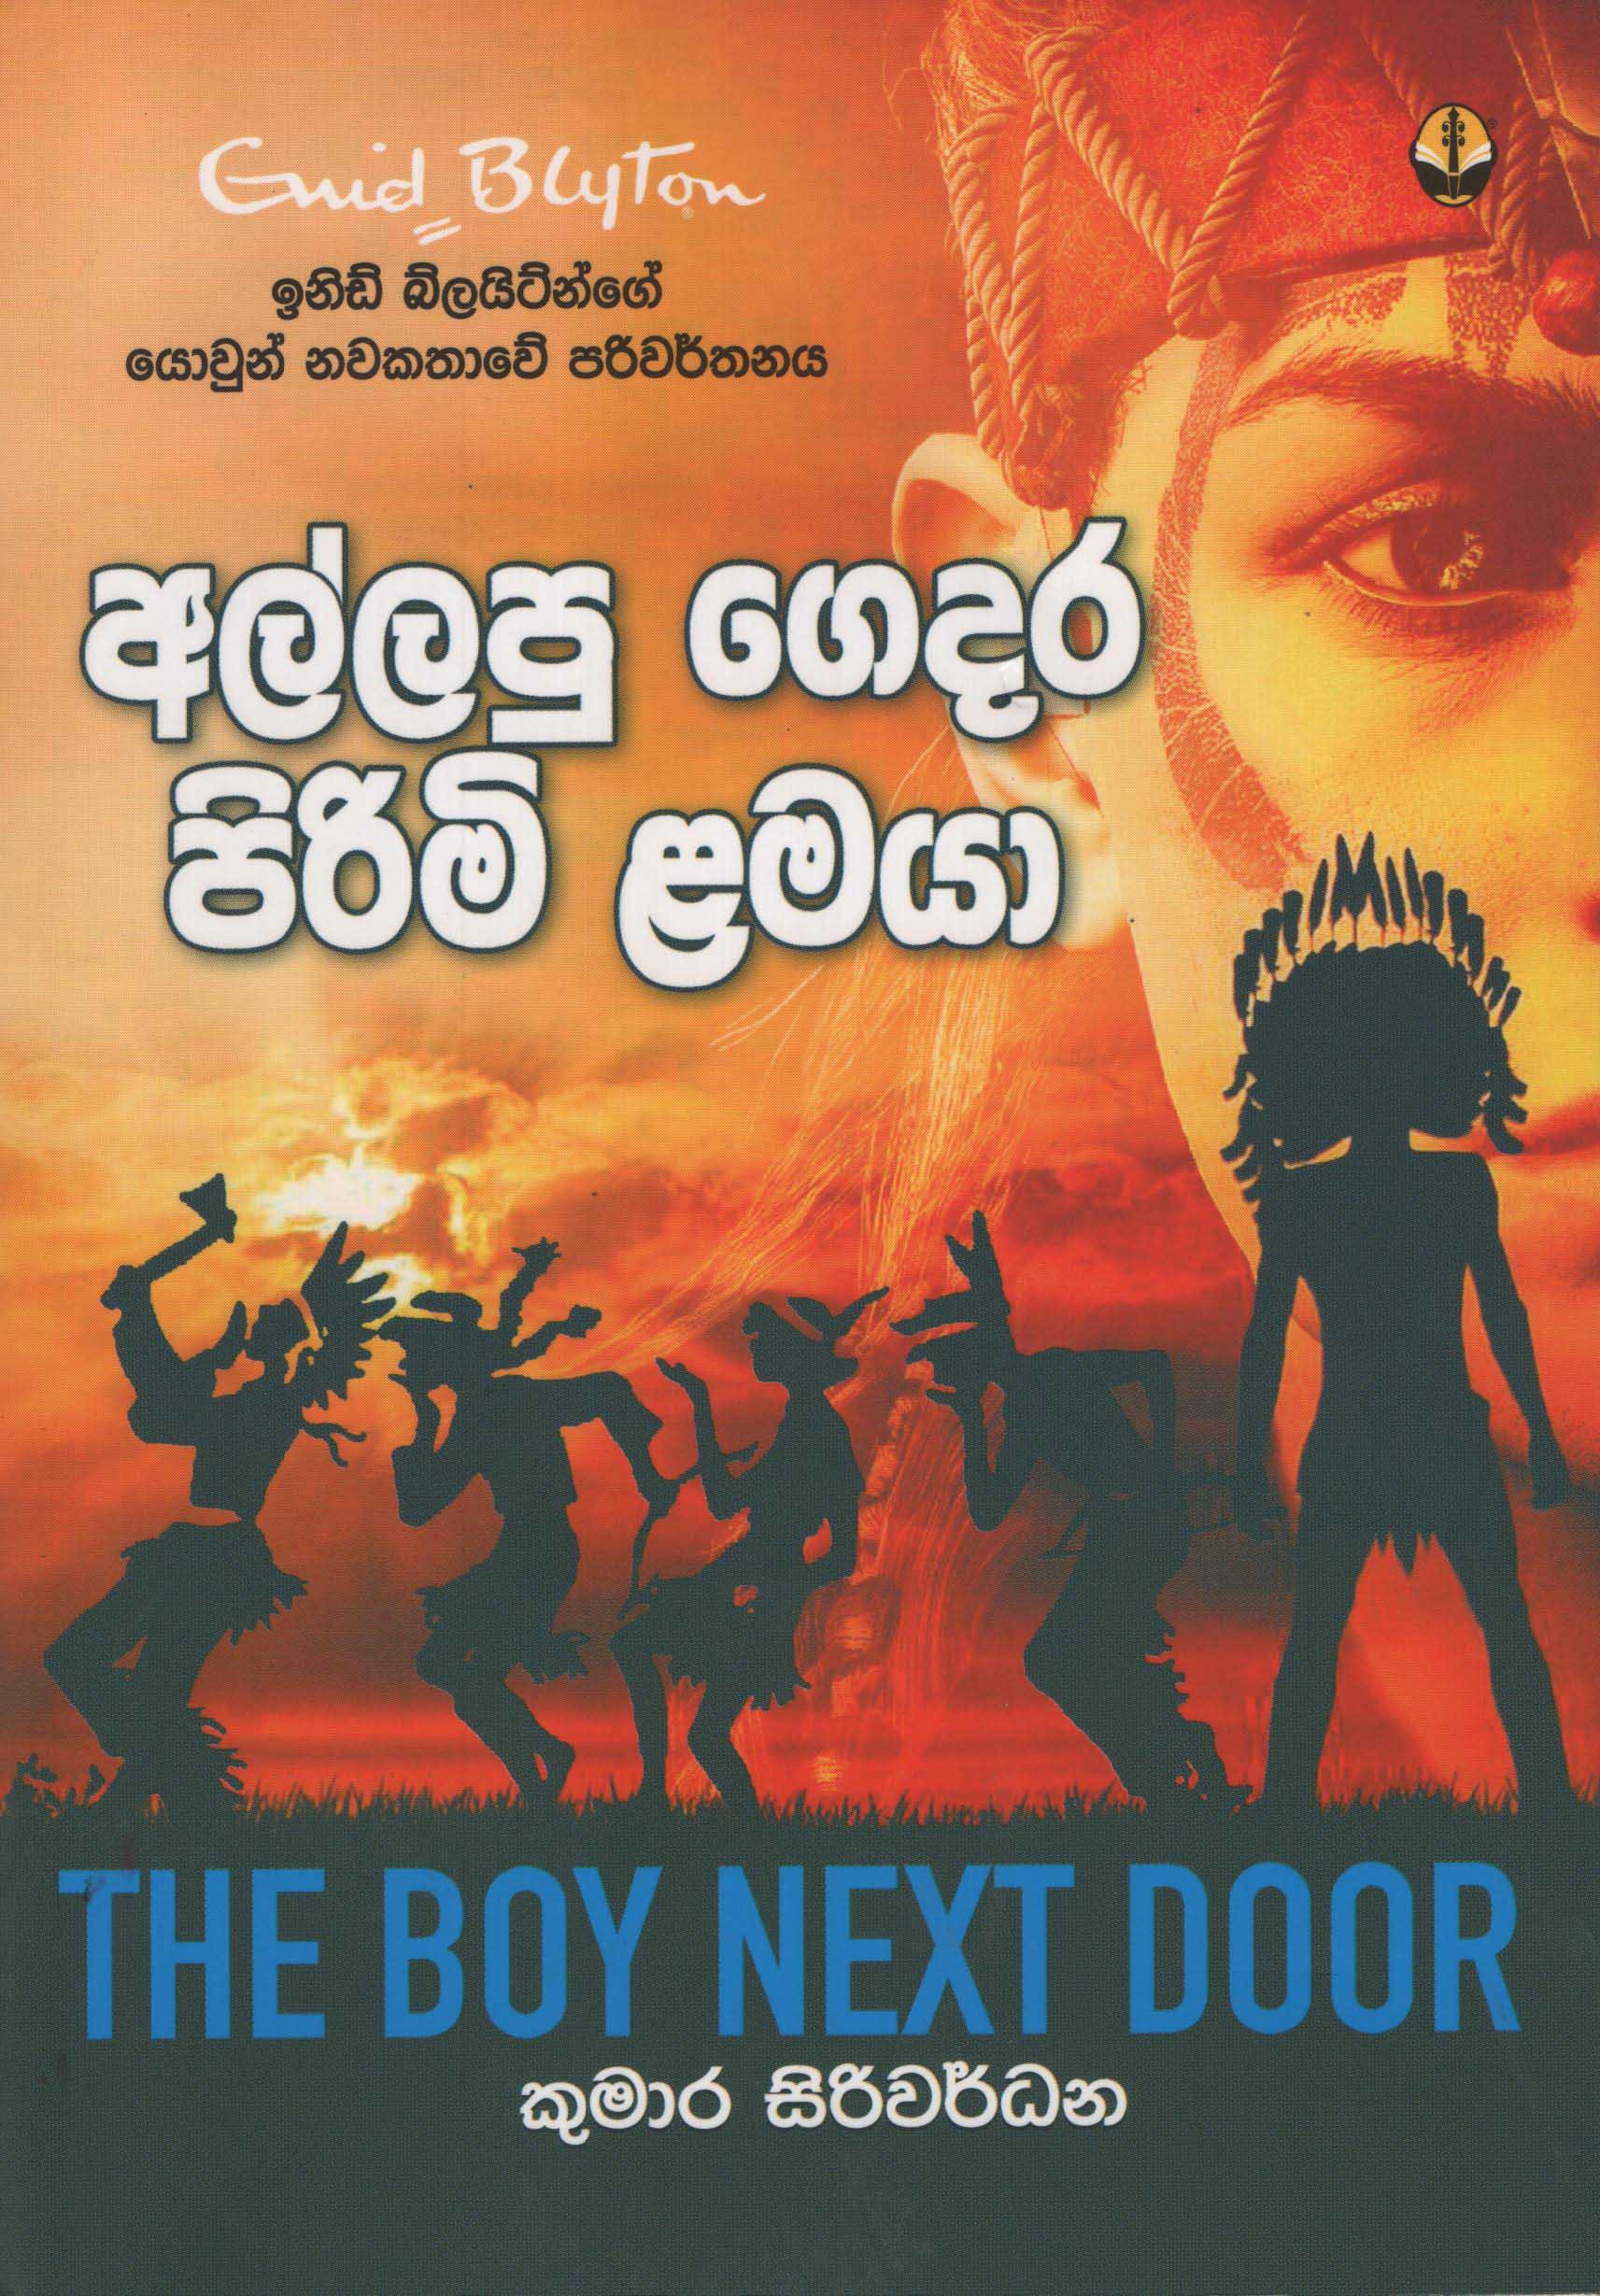 Allapu Gedara Pirimi Lamaya Translation of The Boy Next Door By Enid Blyton  - අල්ලපු ගෙදර පිරිමි ළමයා